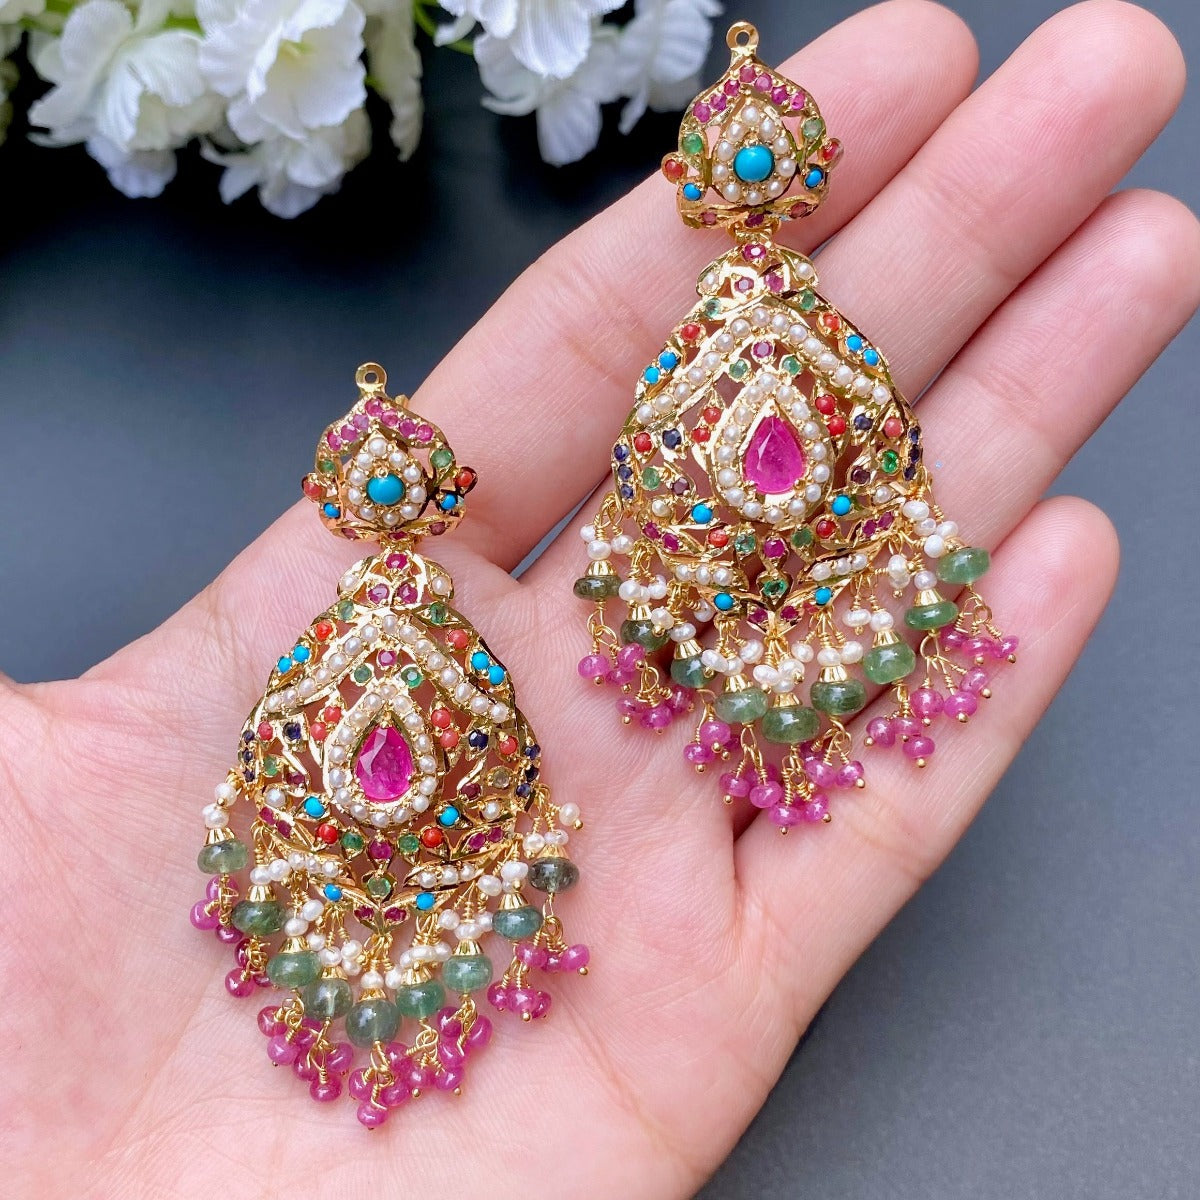 22 carat 22k 18 carat gold earrings in navratna colors